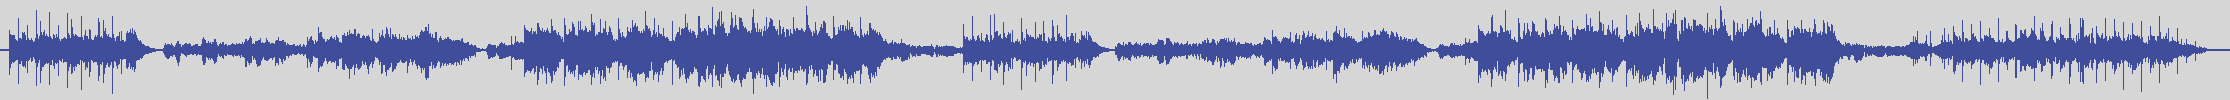 digiphonic_records [DPR006] Nino D'Angelo - E' Troppo Tardi [Original Mix] audio wave form